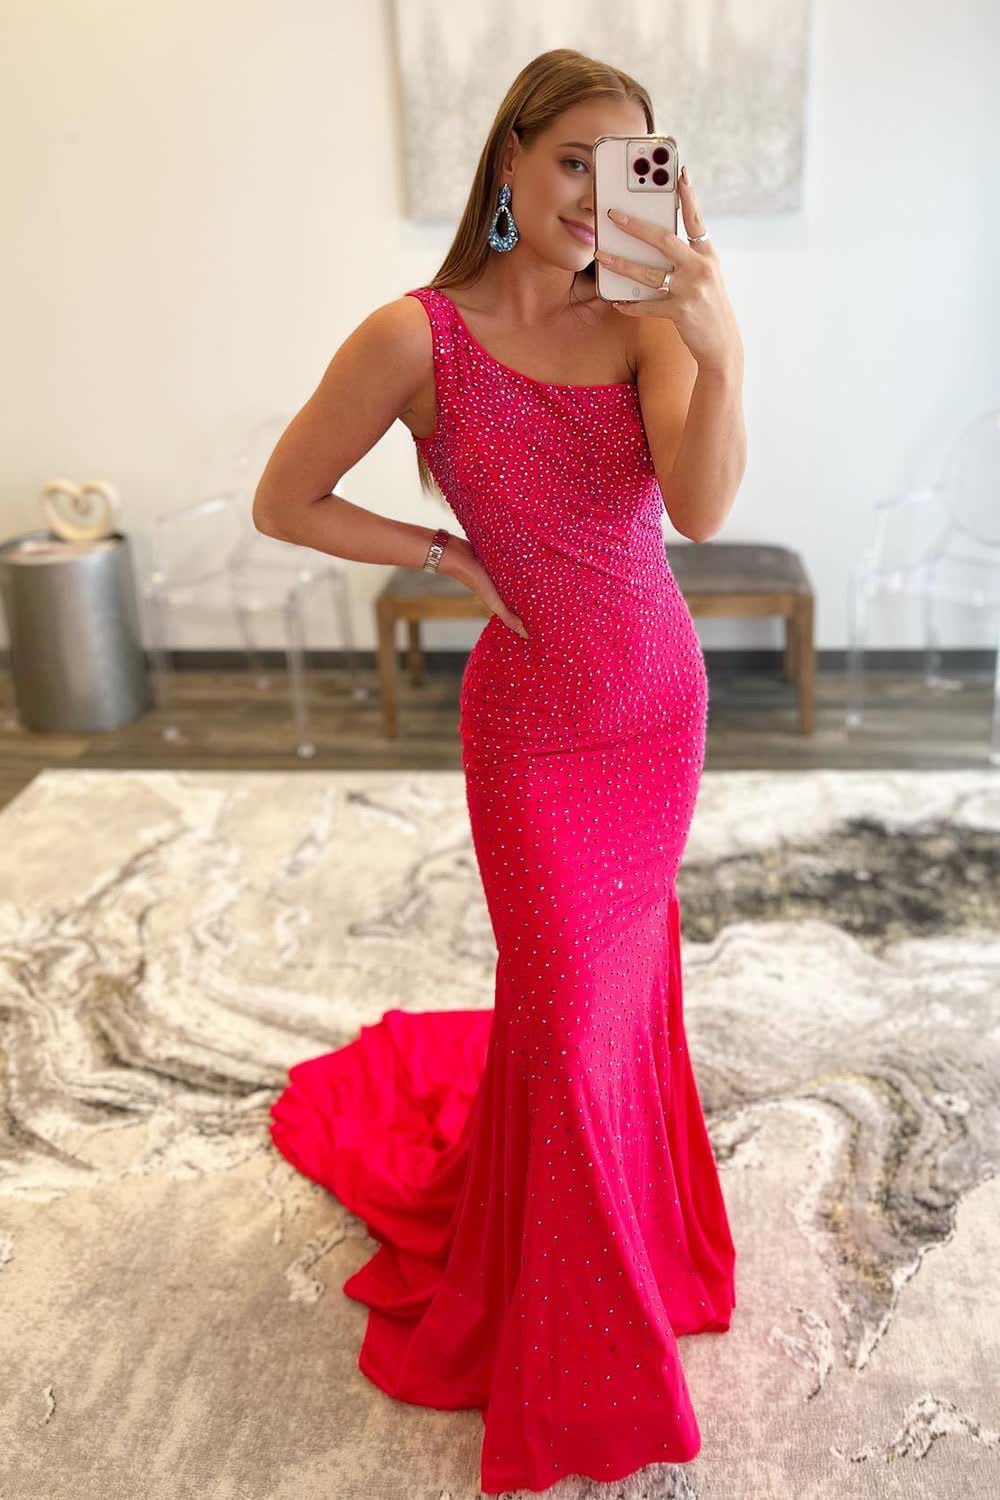 Hot Pink One Shoulder Mermaid Corset Prom Dress outfits, Hot Pink One Shoulder Mermaid Prom Dress